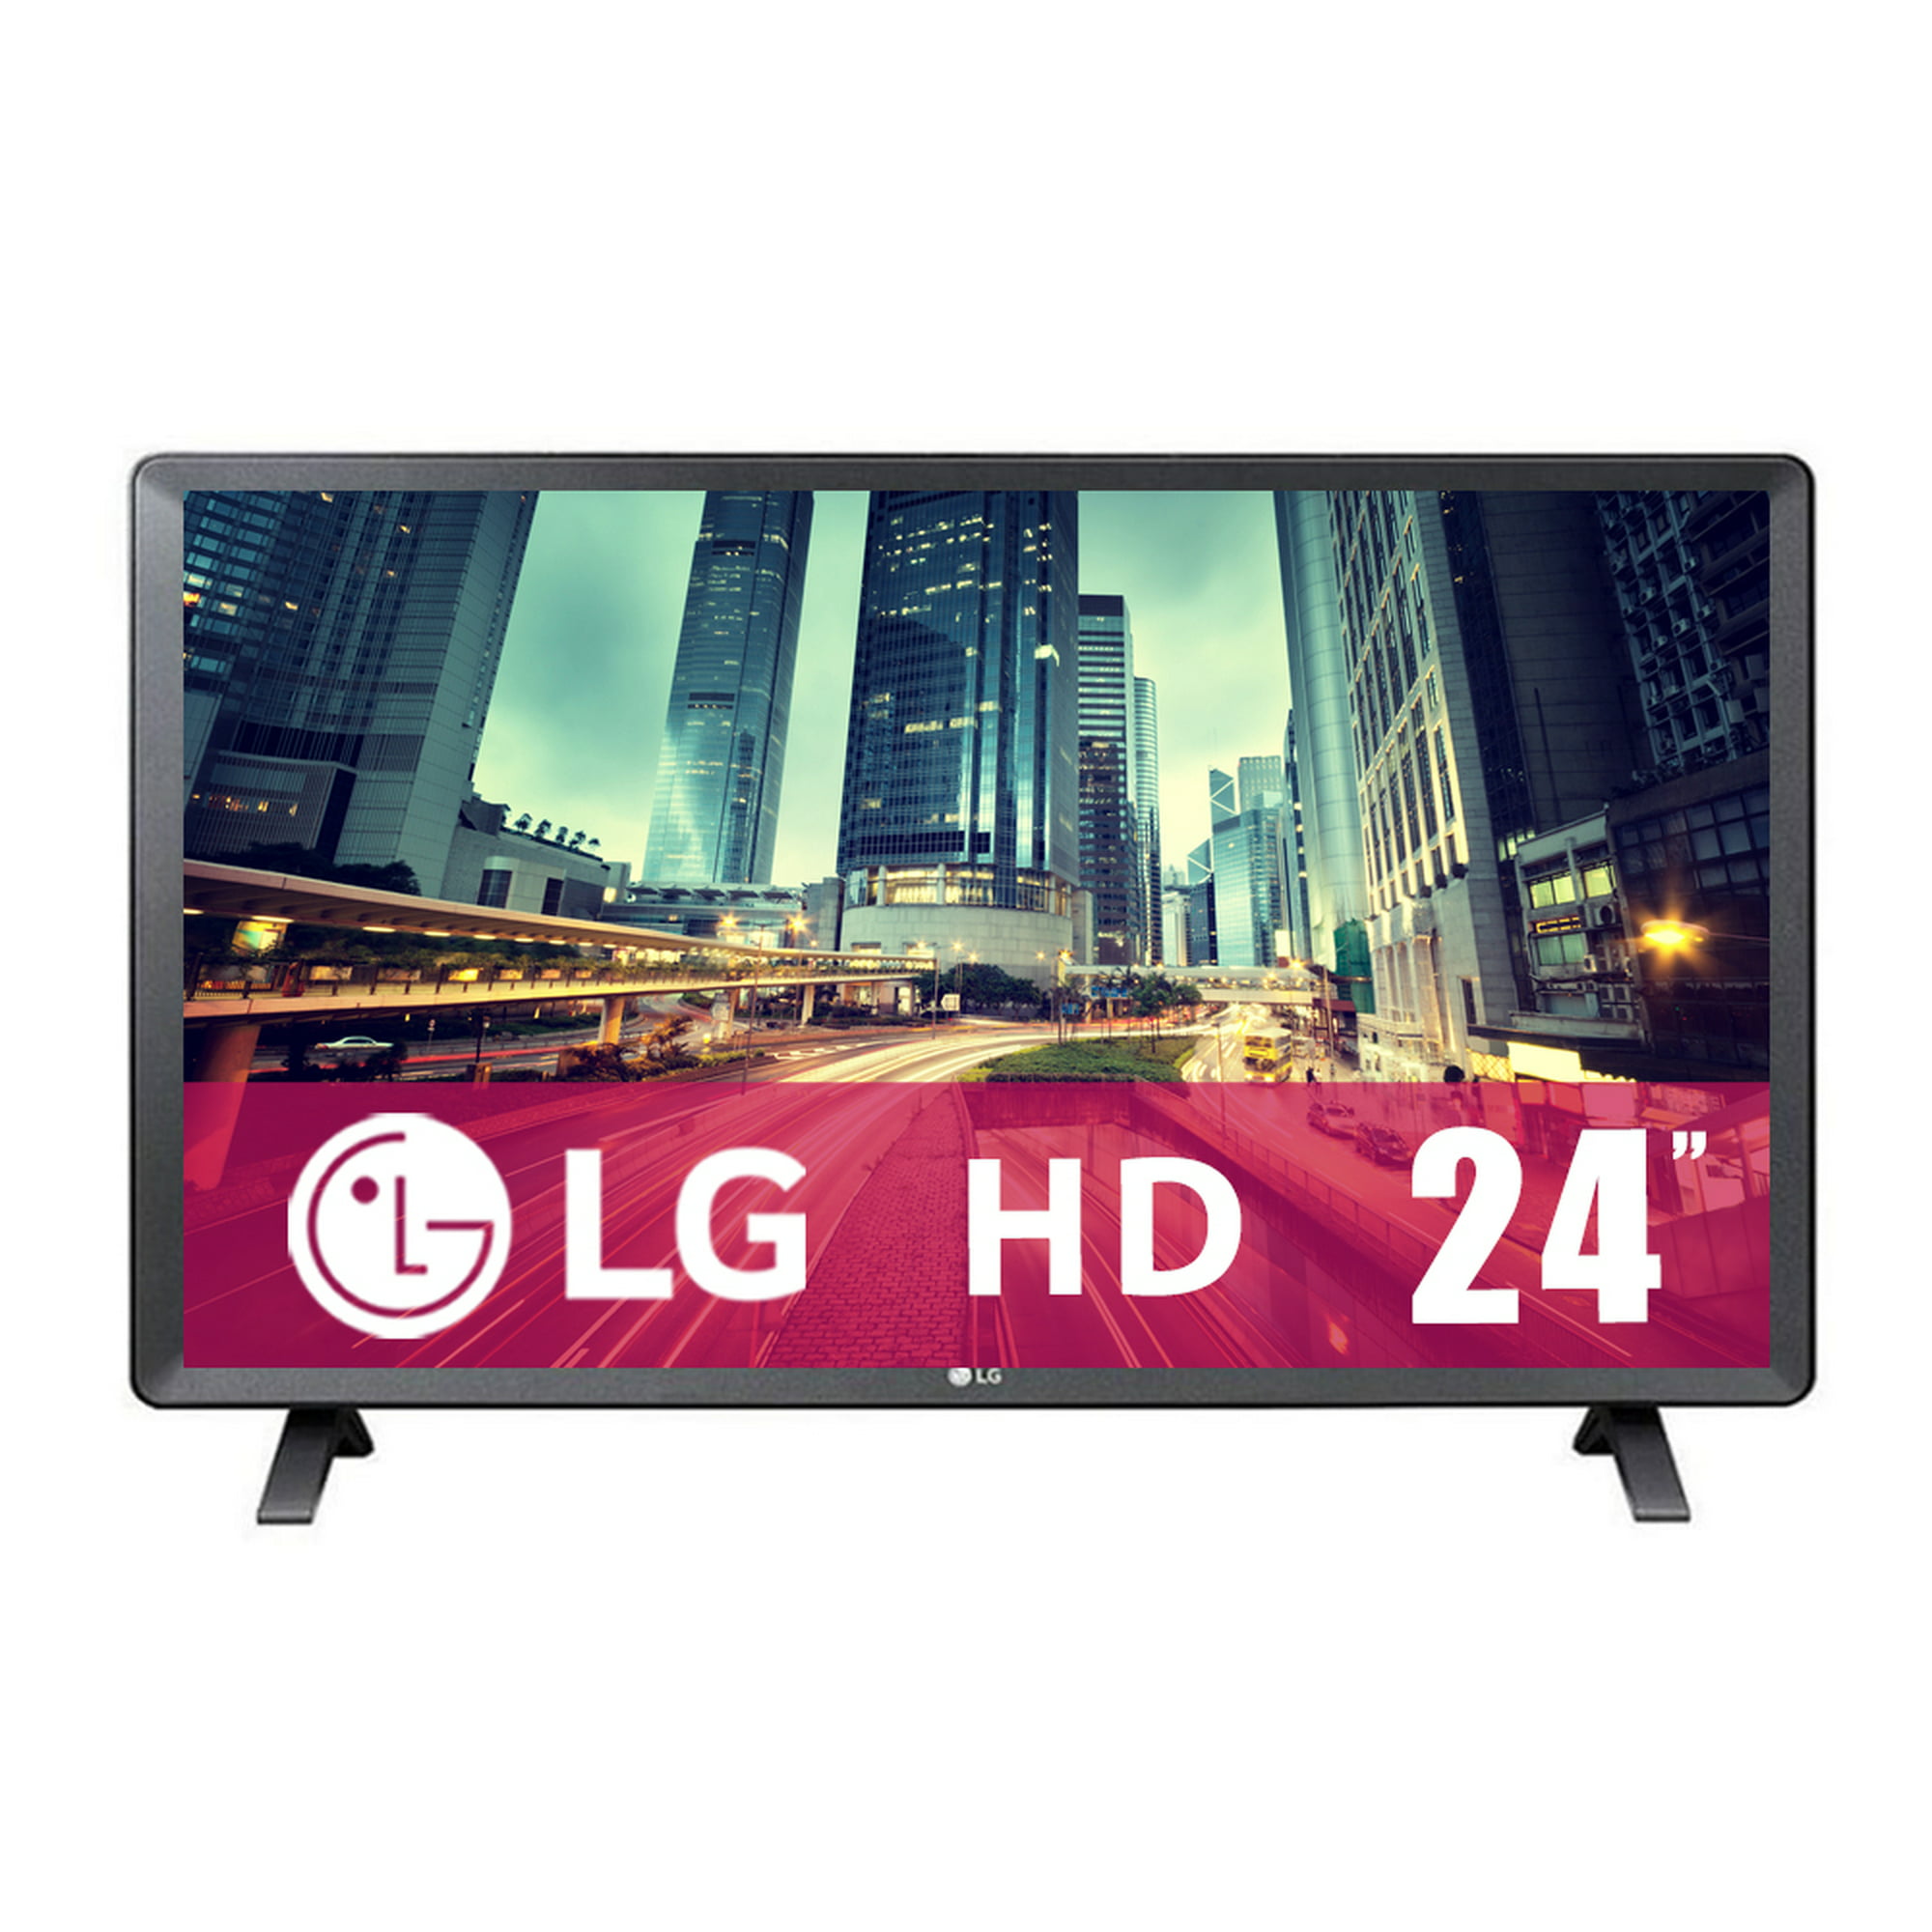 Televisores : Televisor LG 24TL520D 24 pulgadas